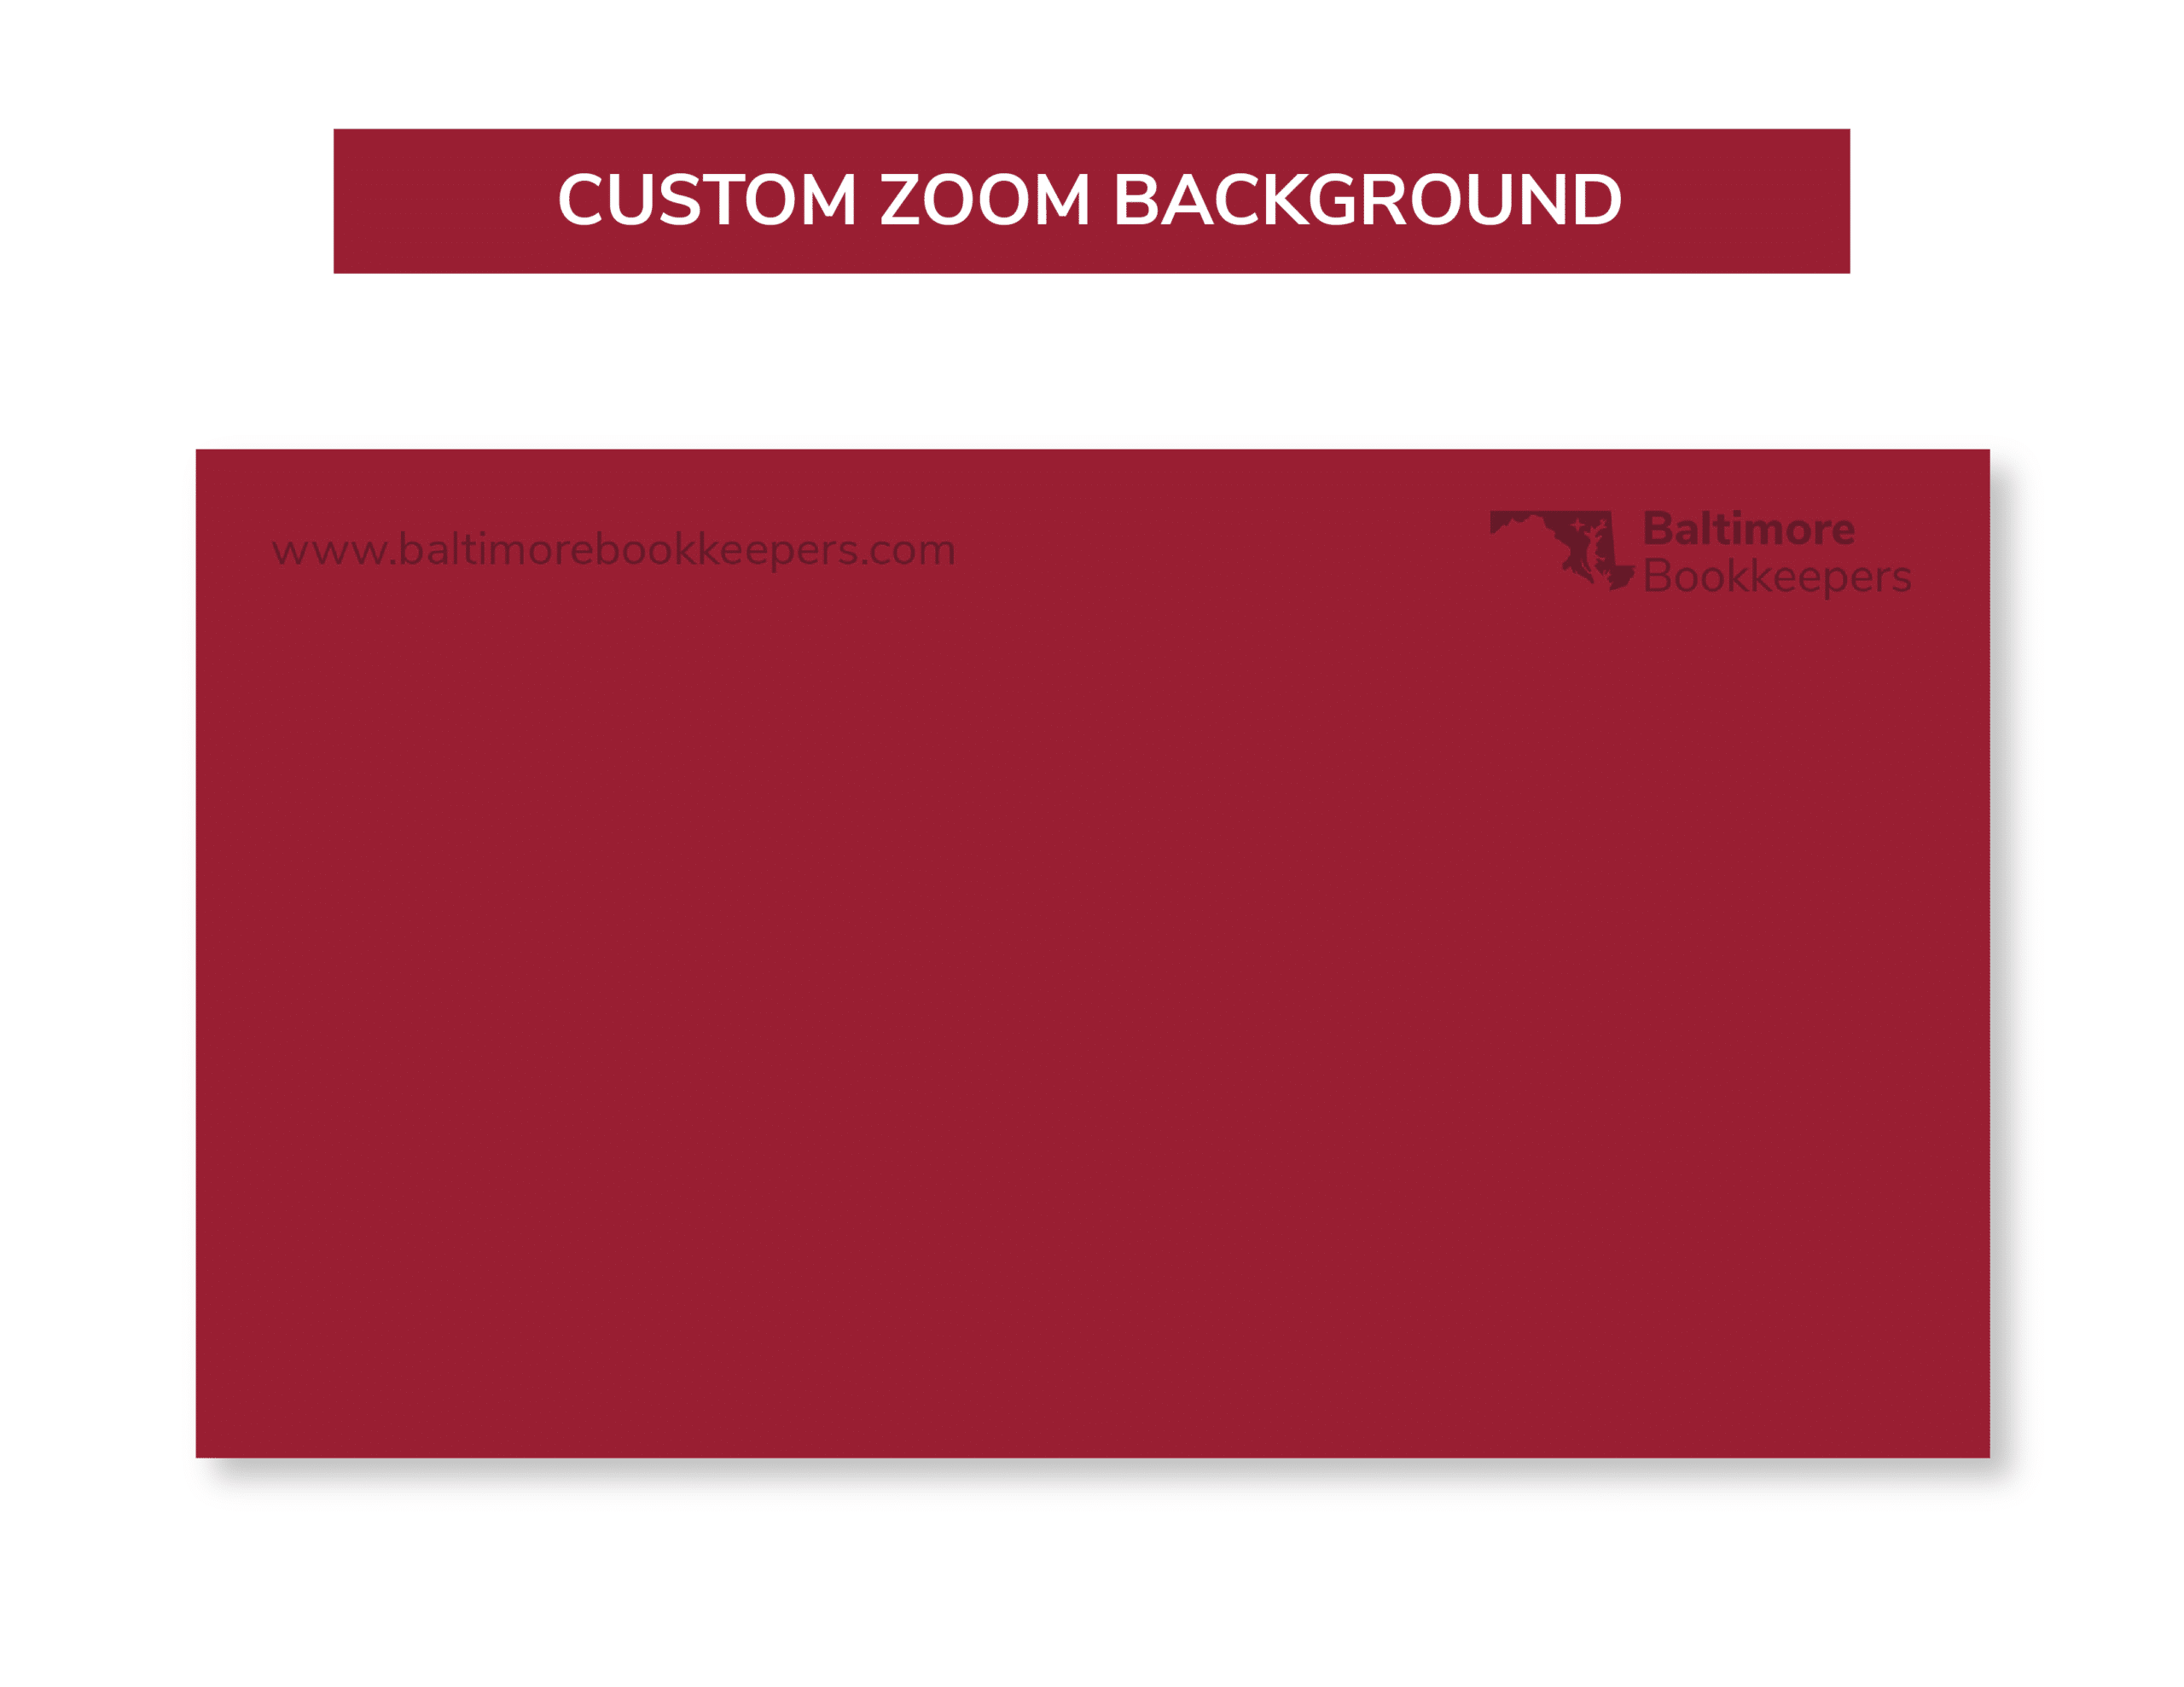 07BaltimoreBK_Showcase_Custom Zoom Background